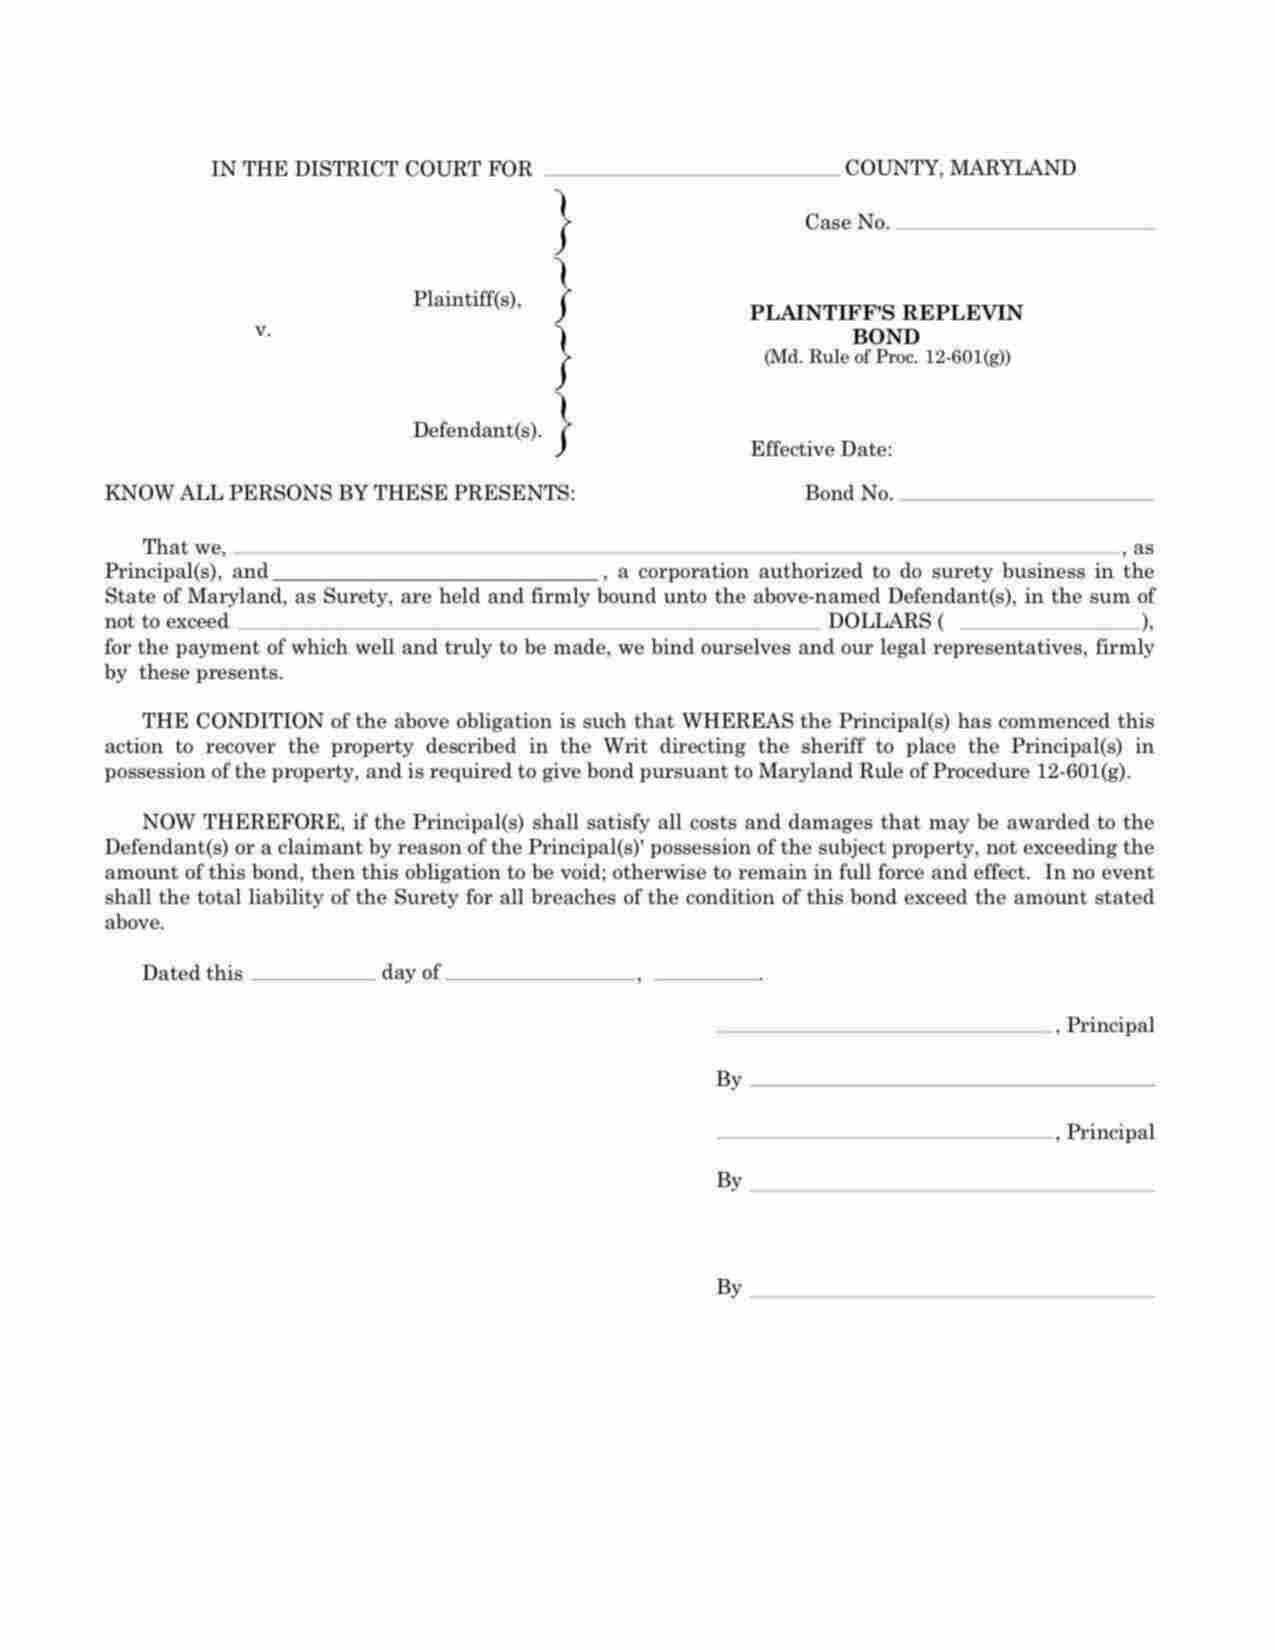 Maryland Plaintiffs Replevin Bond Form